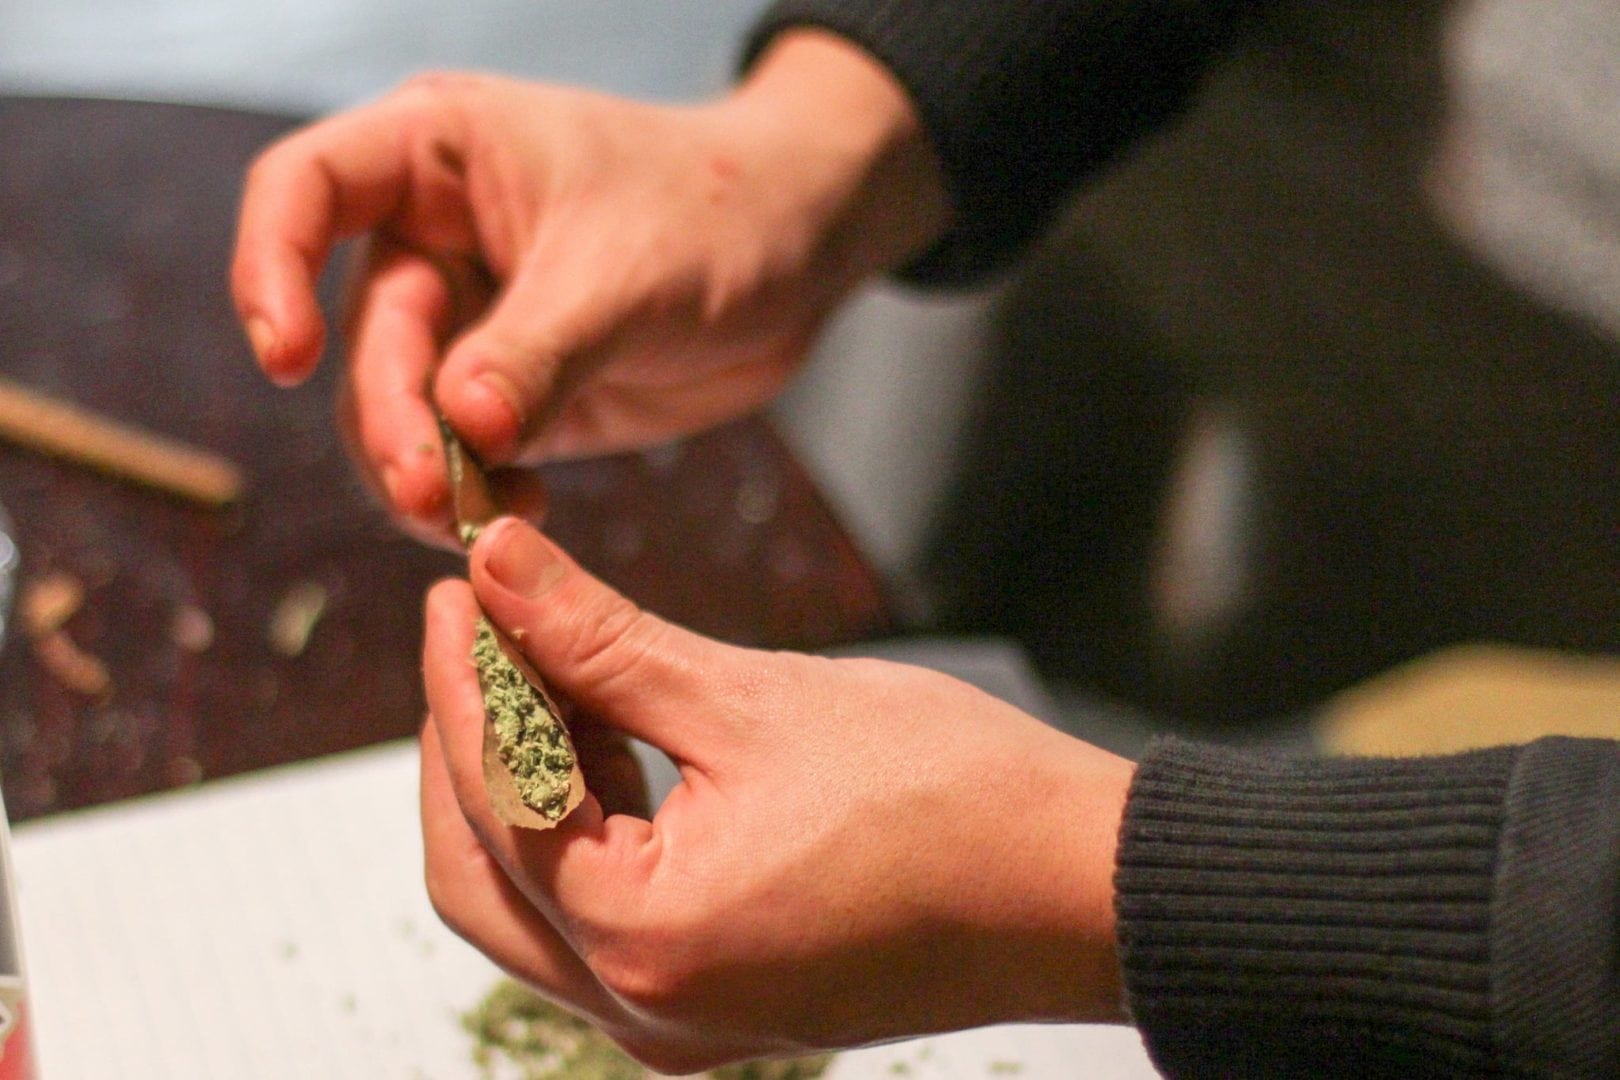 SCIENCE & HEALTHMedical Marijuana Laws Don’t Increase Crime, New Study Says